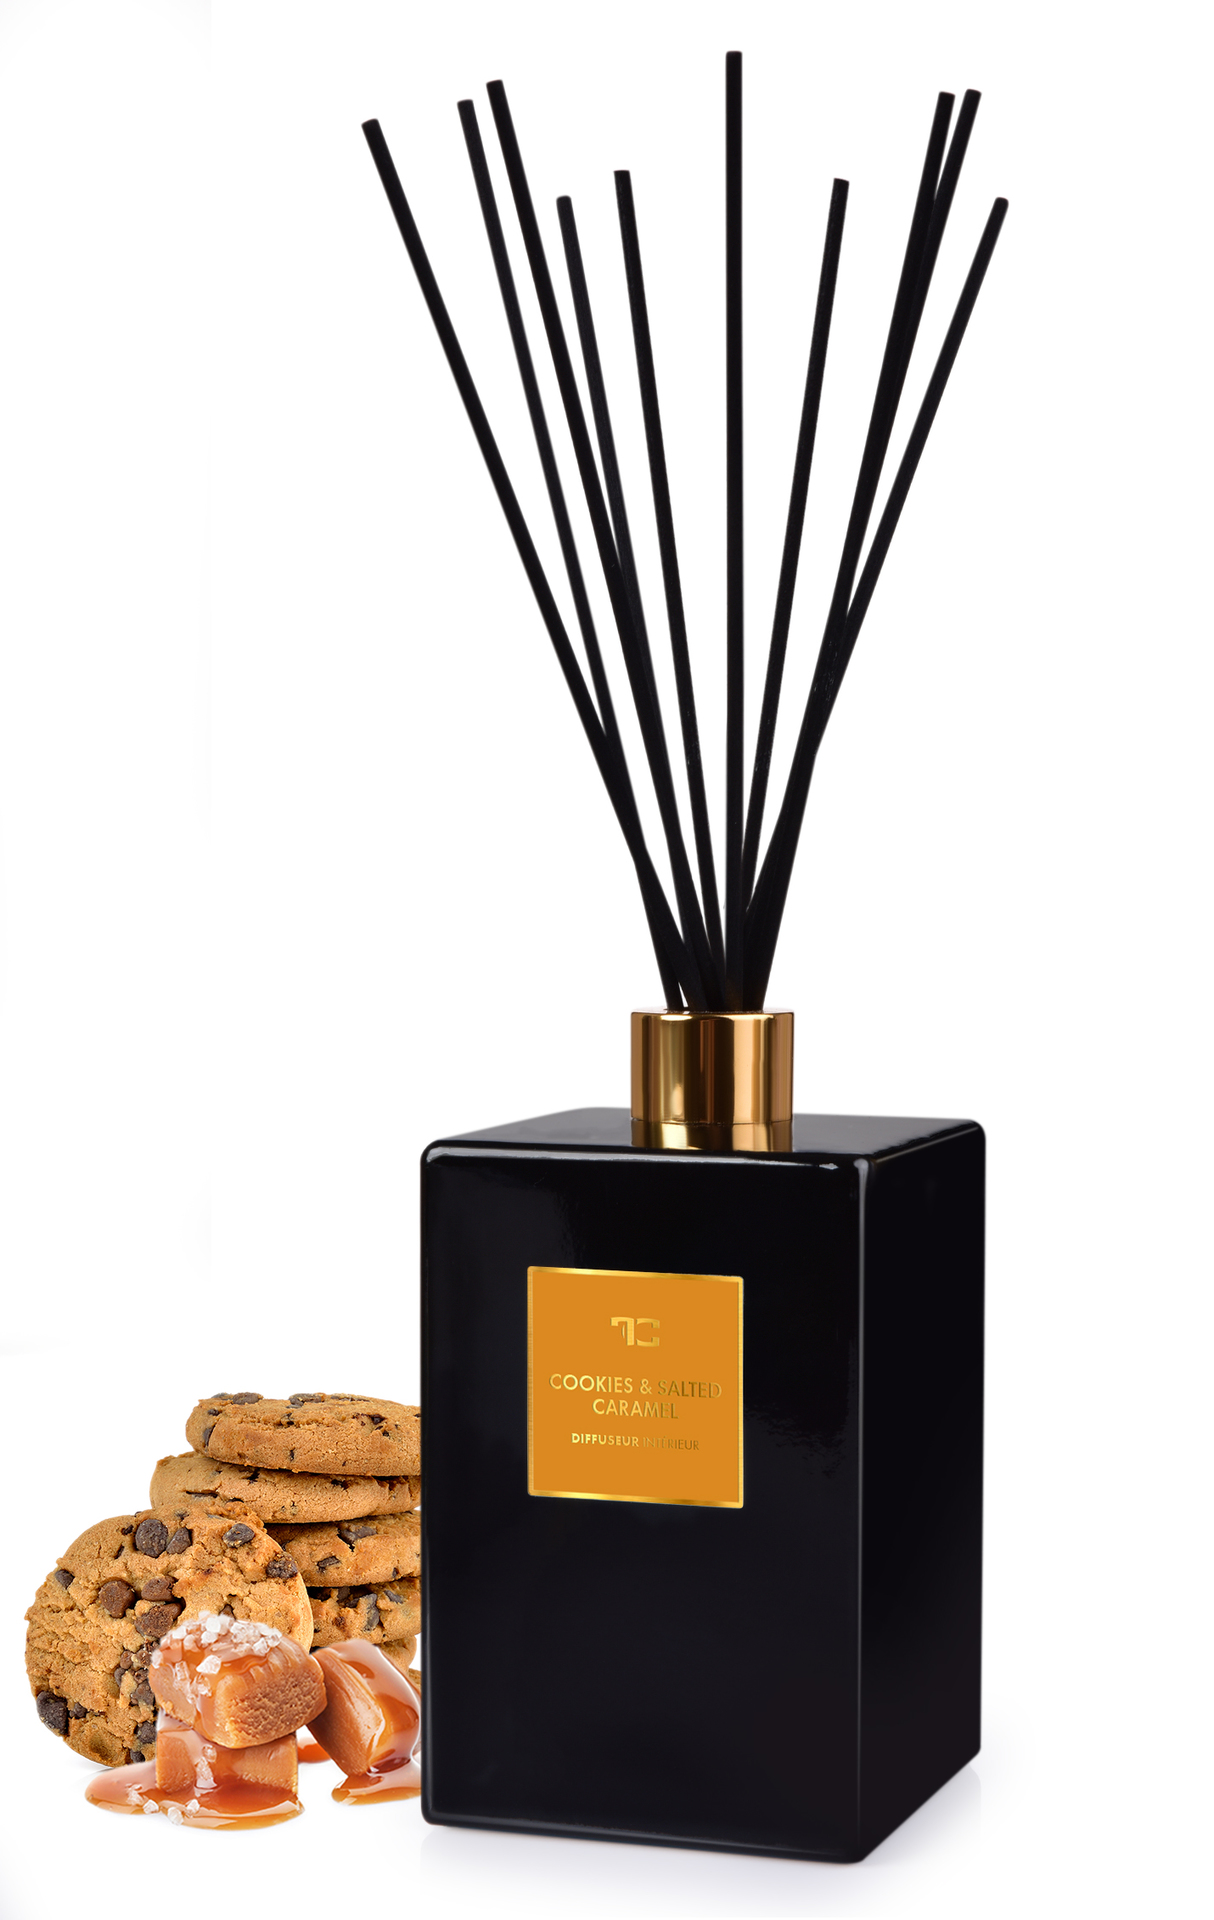 Interiérový tyčinkový bytový parfém COOKIES & SALTED CARAMEL DIFFUSEUR INTÉRIEUR 